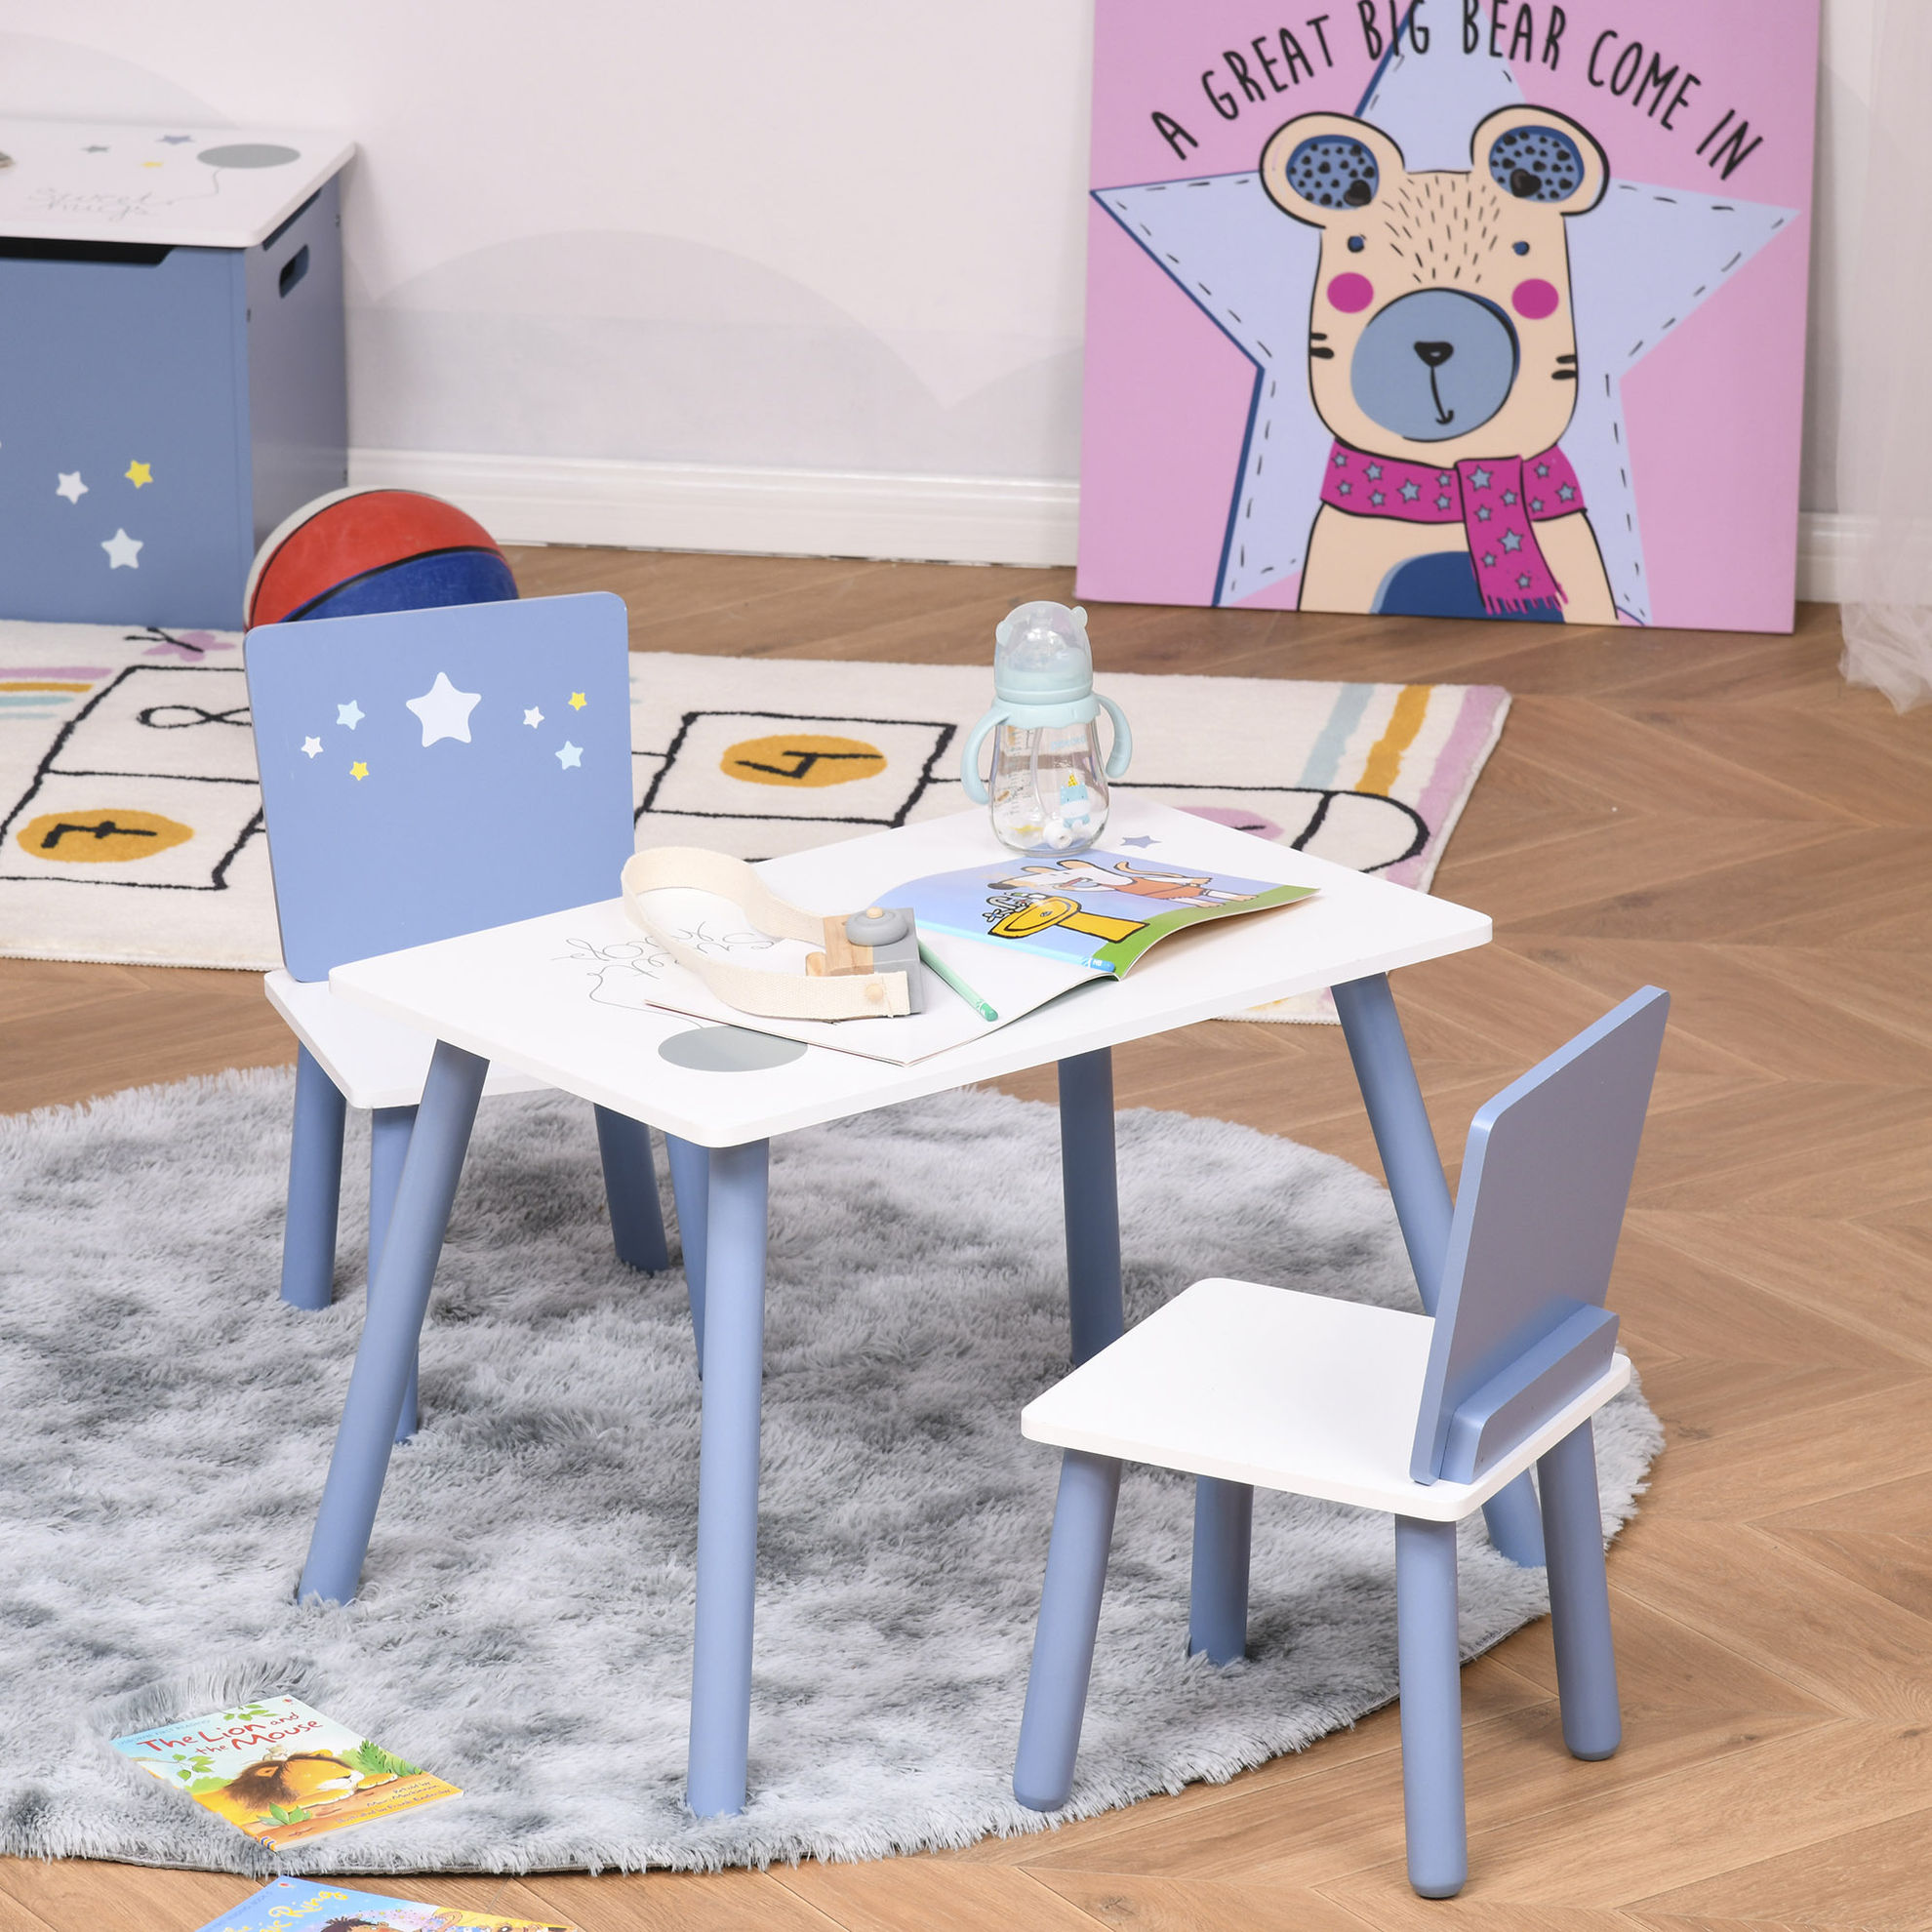 3-teilige Kindersitzgruppe mit Sternen-Design | Weltbild.de